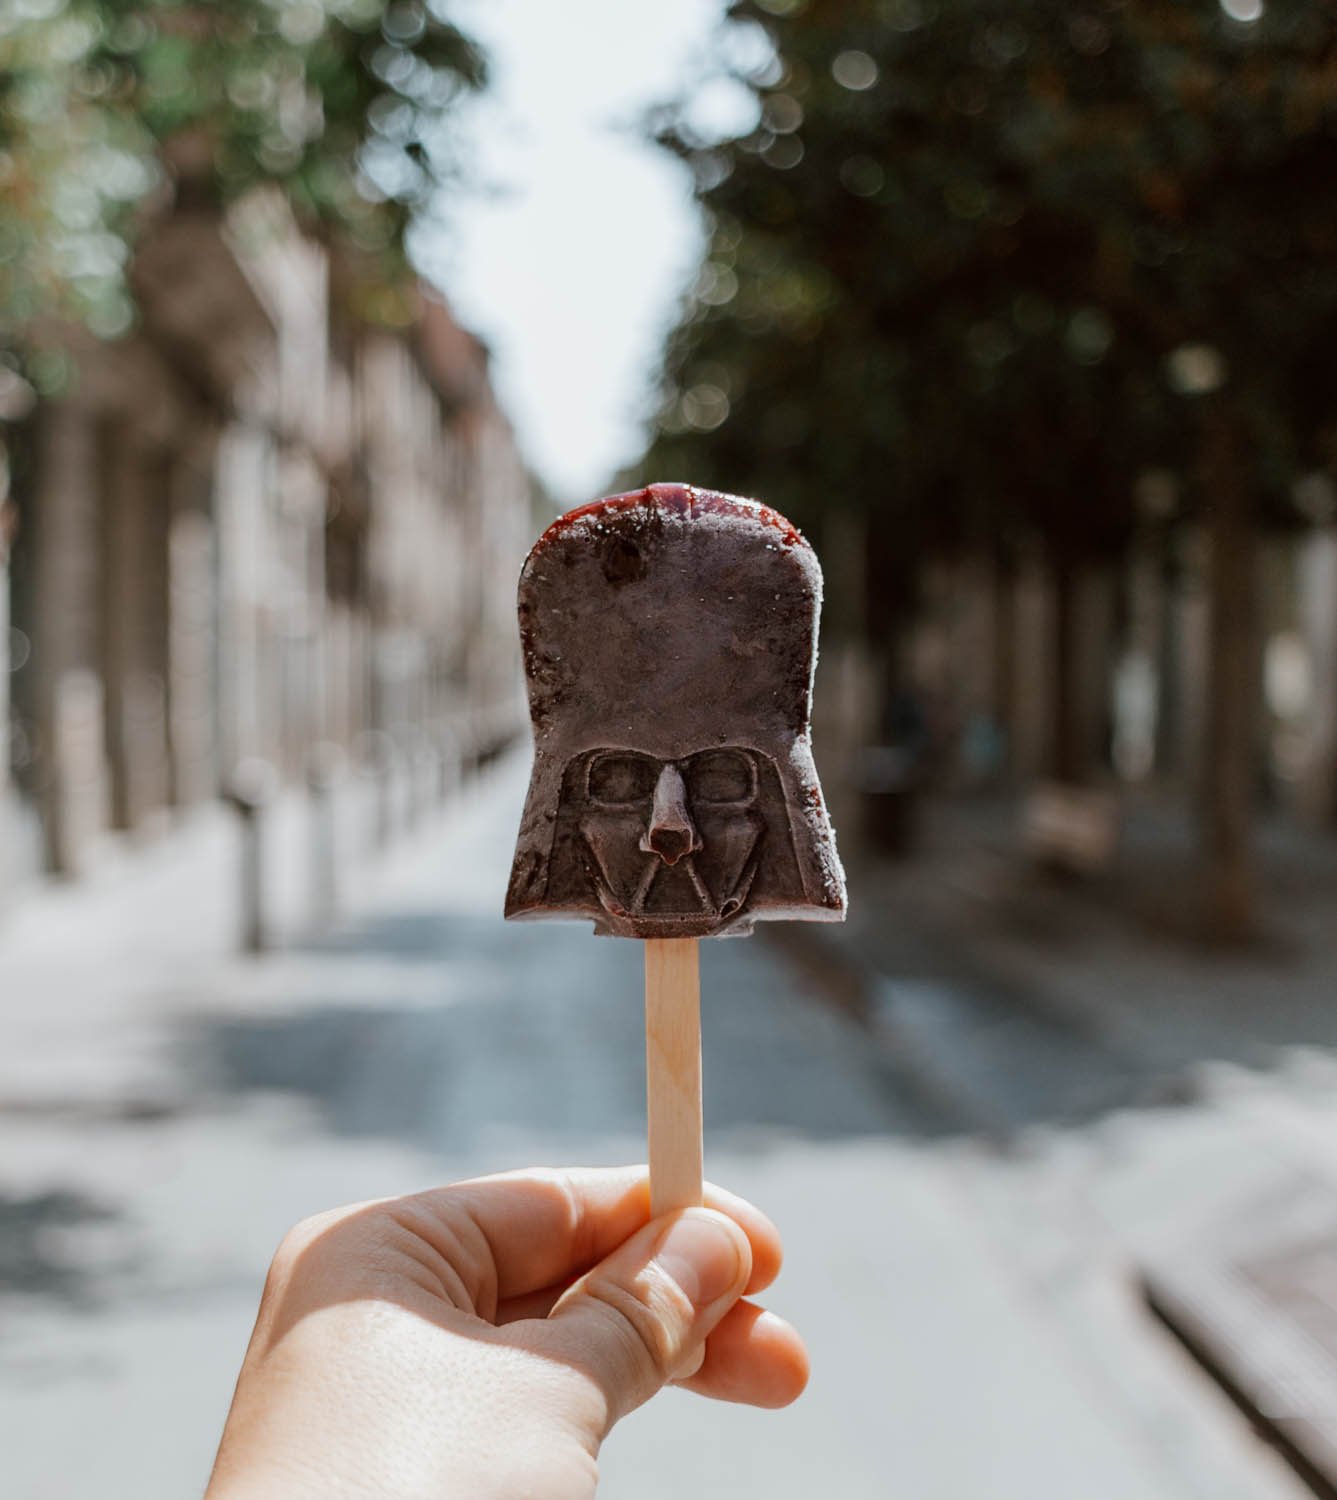 Things to do in Girona, Spain - visit Rocambolesc ice cream shop